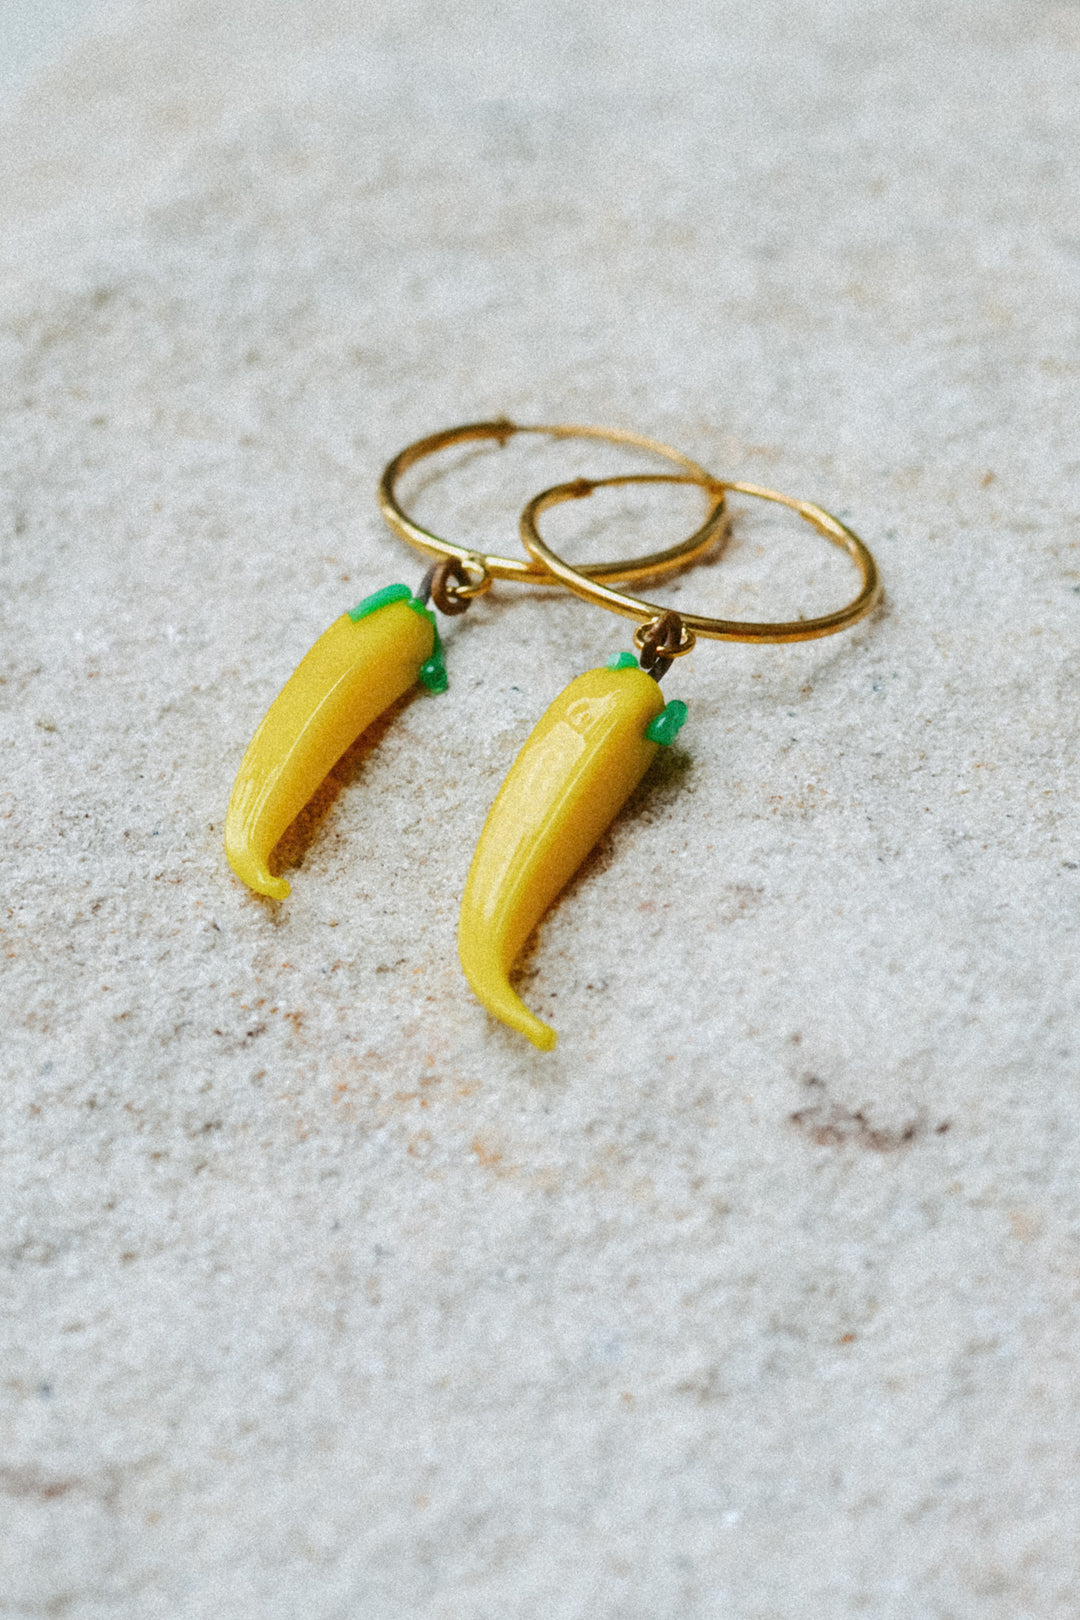 The banana fruit hoops